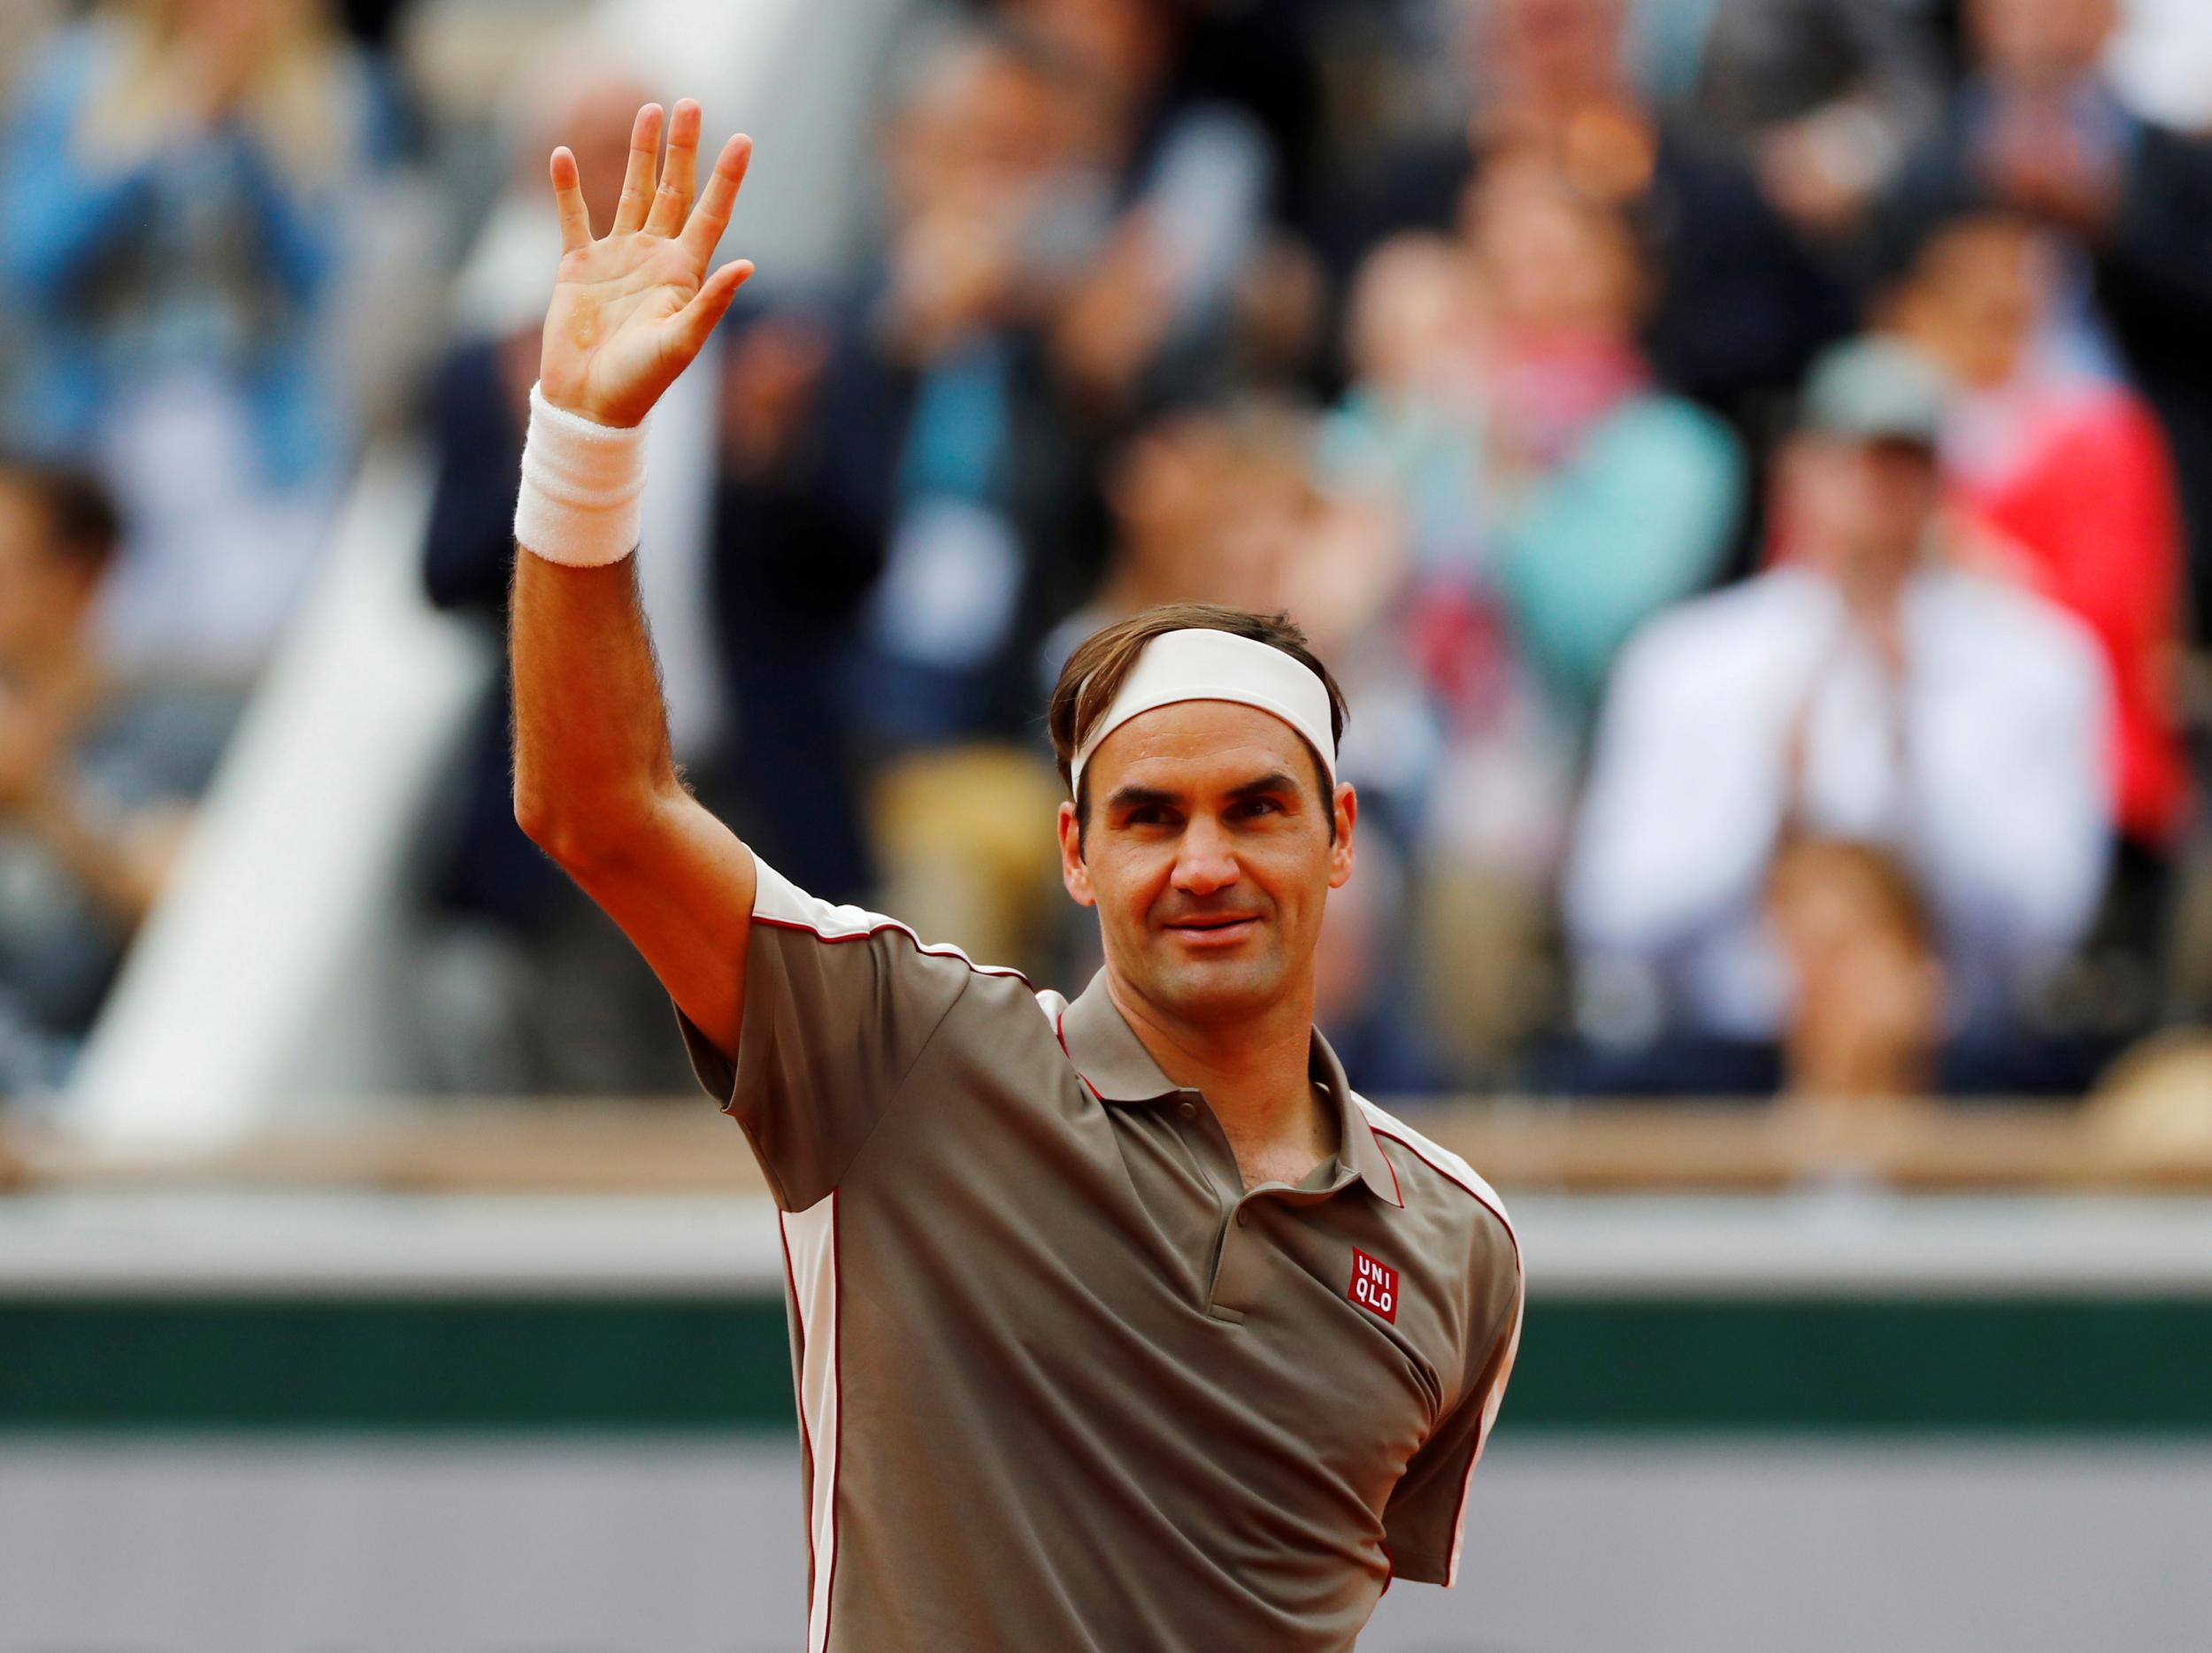 French Open 2019: Roger Federer swats aside Lorenzo Sonego on return to Roland Garros